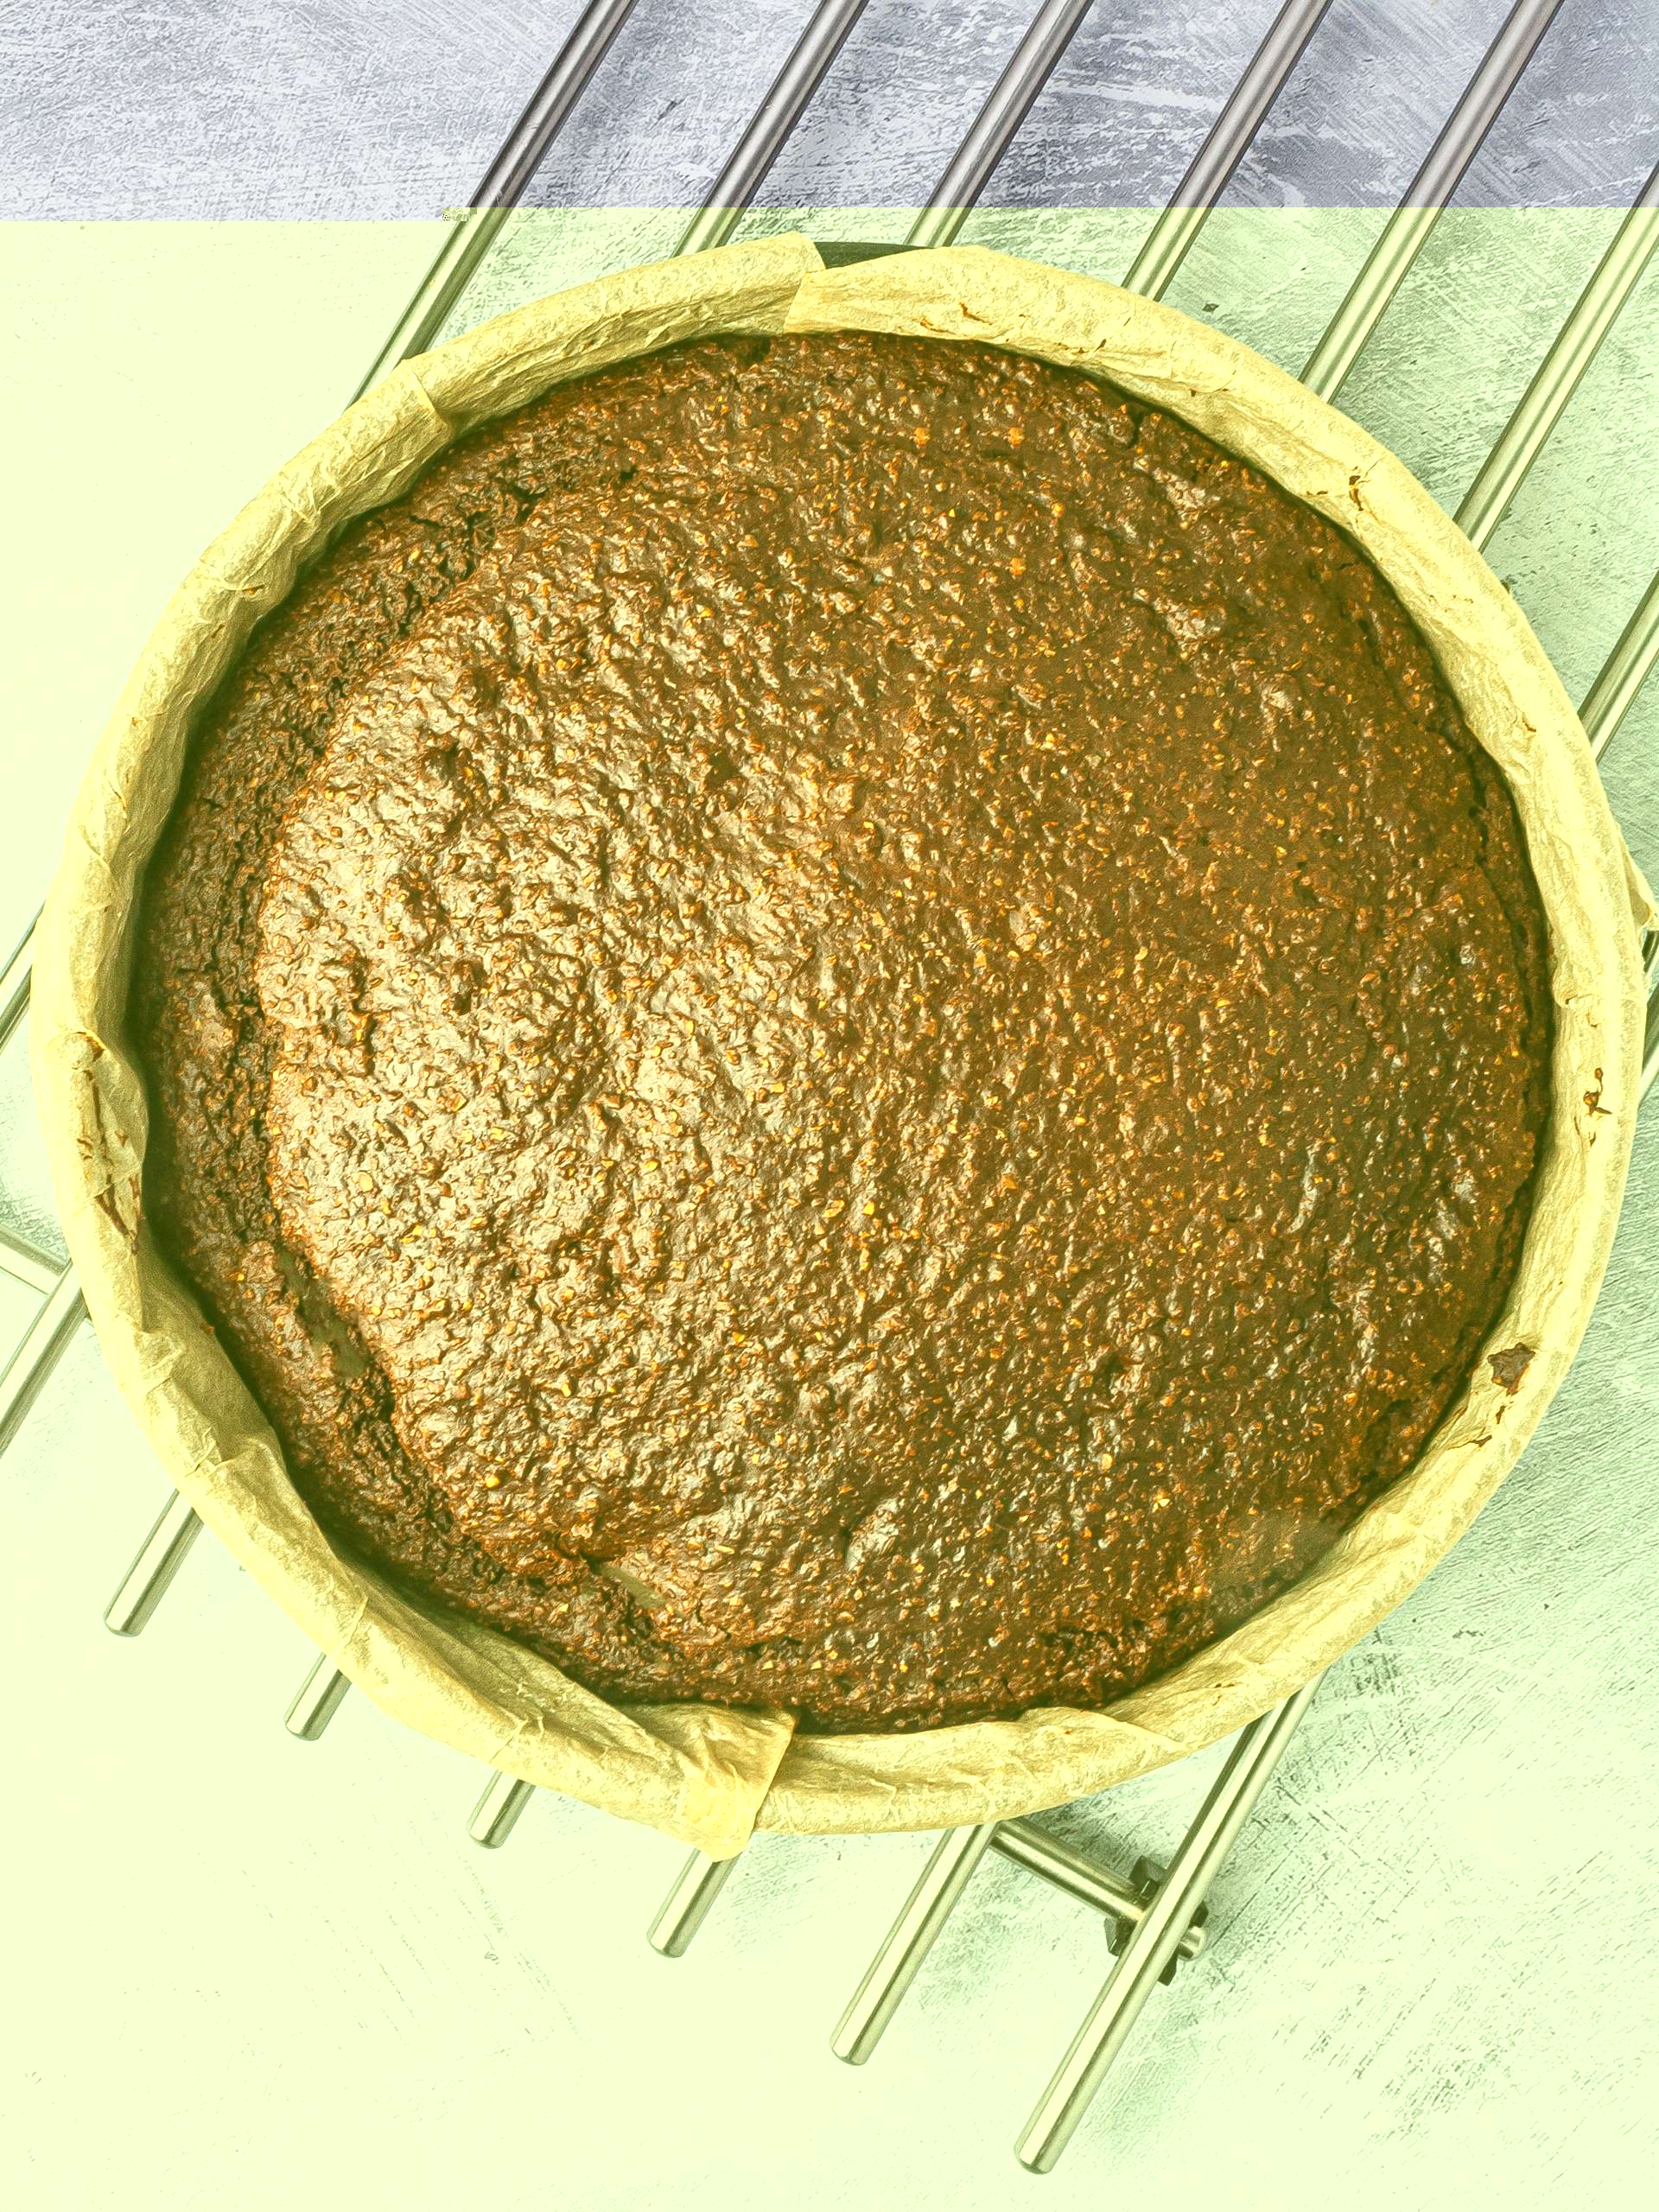 Chocolate lavender cake baked 